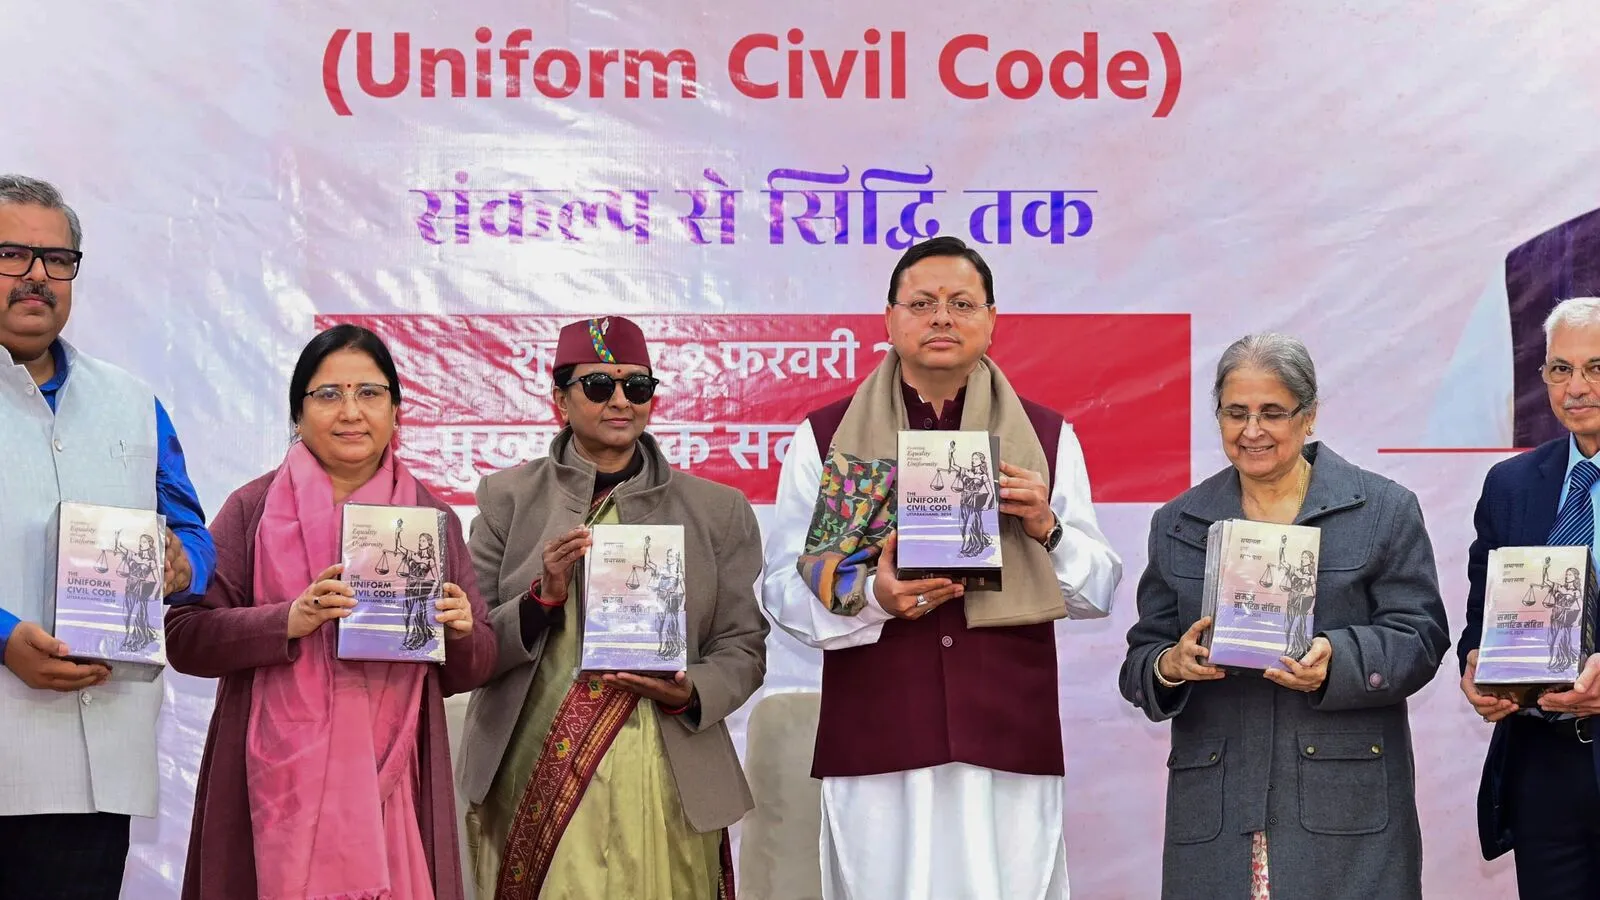 Muslim party protest against Uniform Civil Code in Uttarakhand